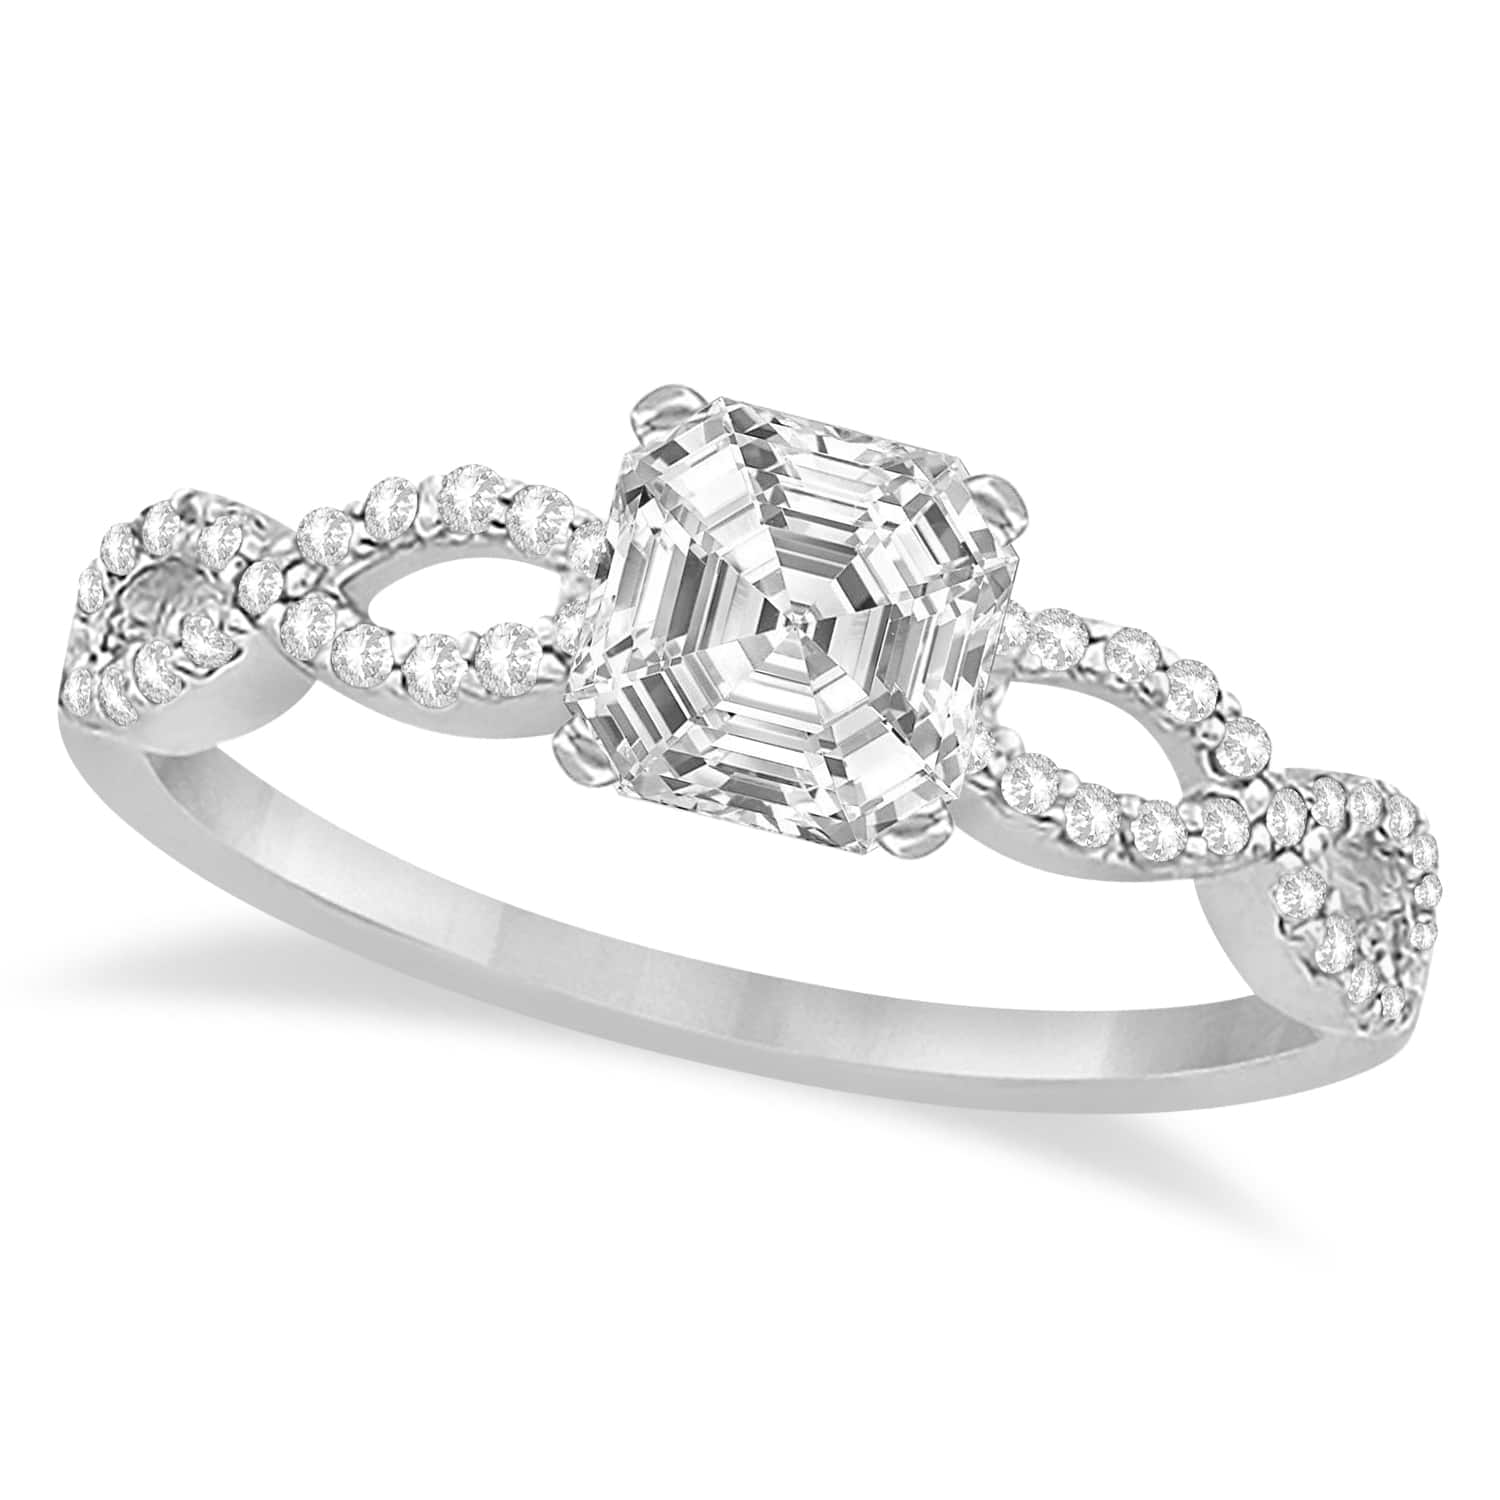 Infinity Asscher-Cut Lab Grown Diamond Engagement Ring 14k White Gold (0.75ct)